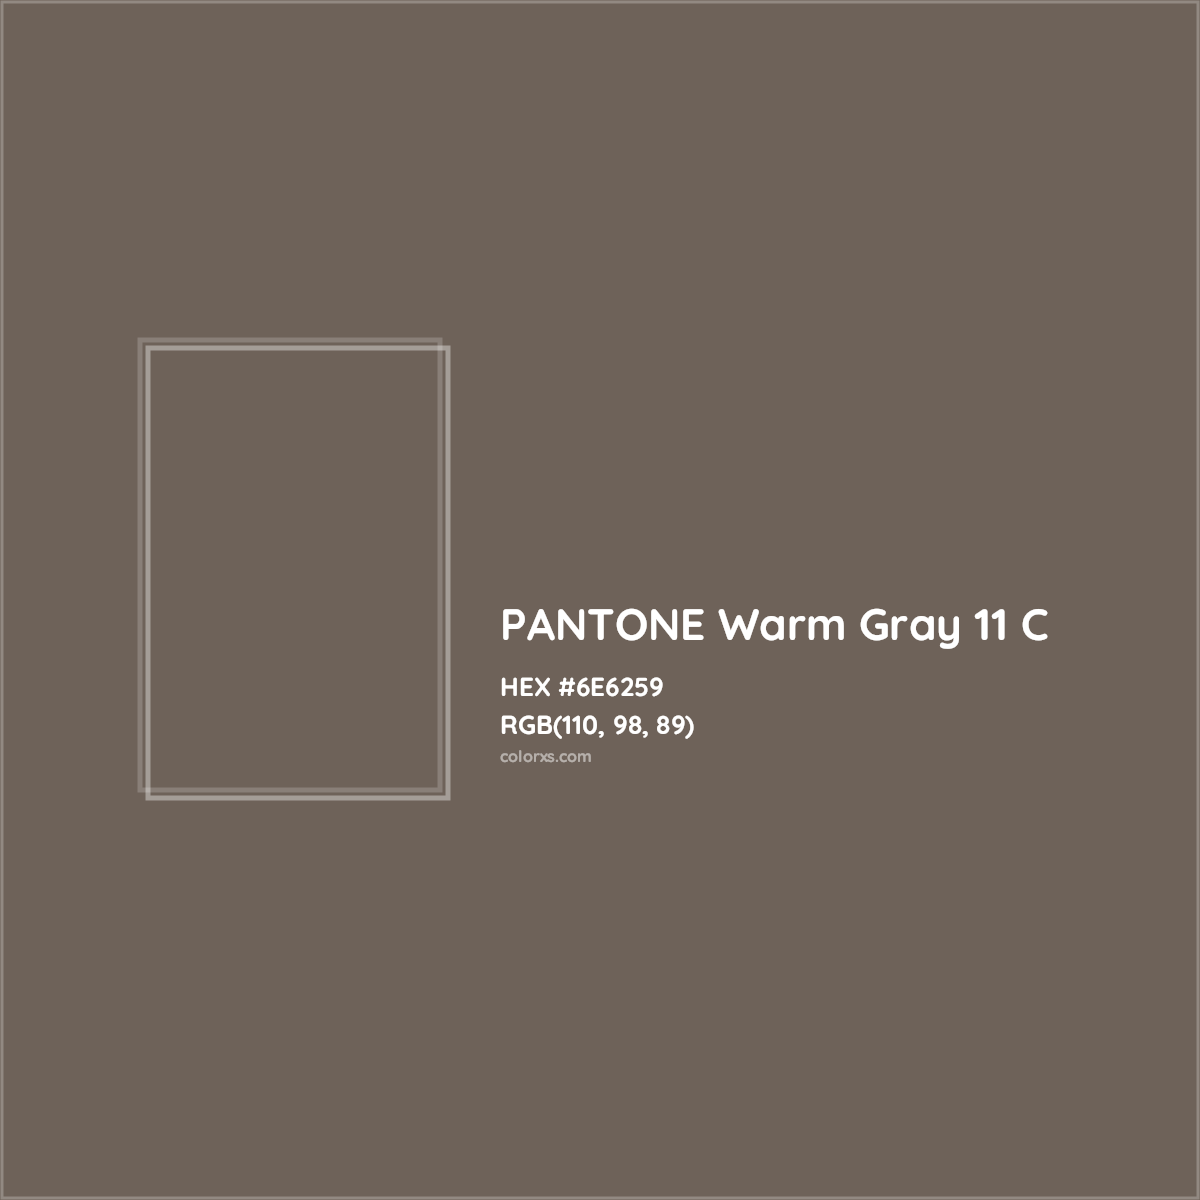 HEX #6E6259 PANTONE Warm Gray 11 C CMS Pantone PMS - Color Code